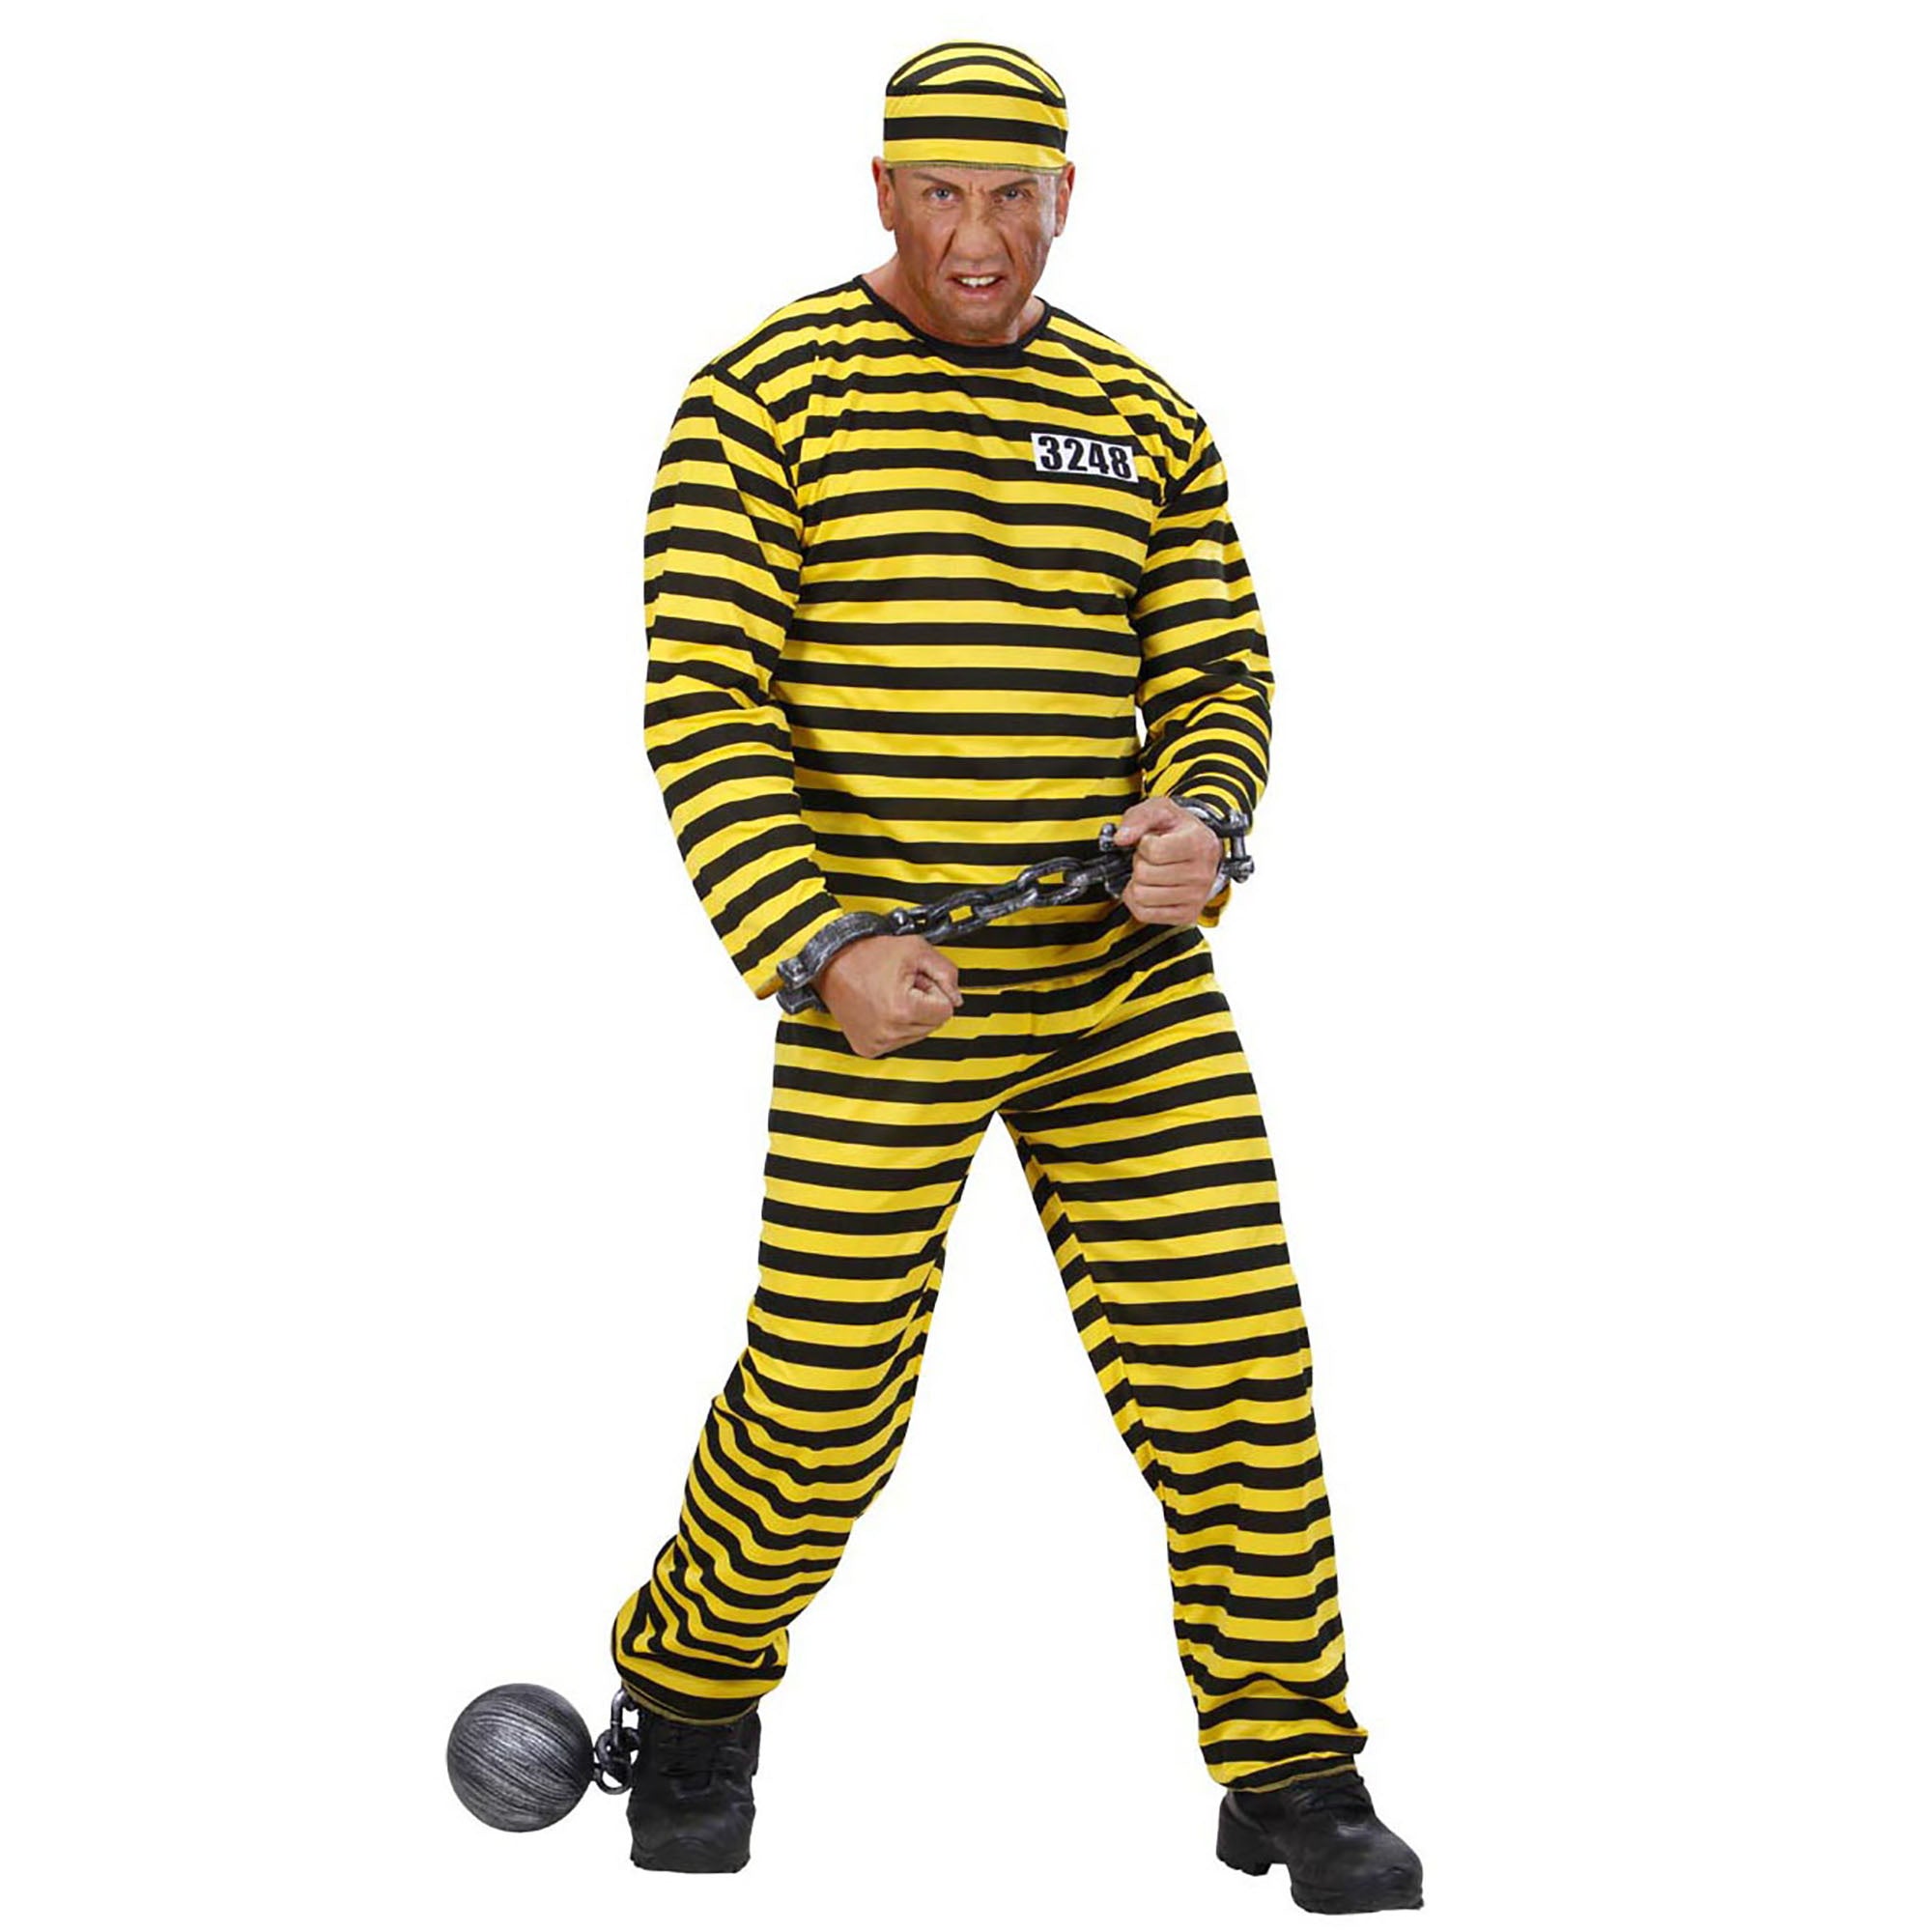 Widmann - Boef Kostuum - Gevangene Zwart-Geel Kostuum Man - geel - Medium - Carnavalskleding - Verkleedkleding